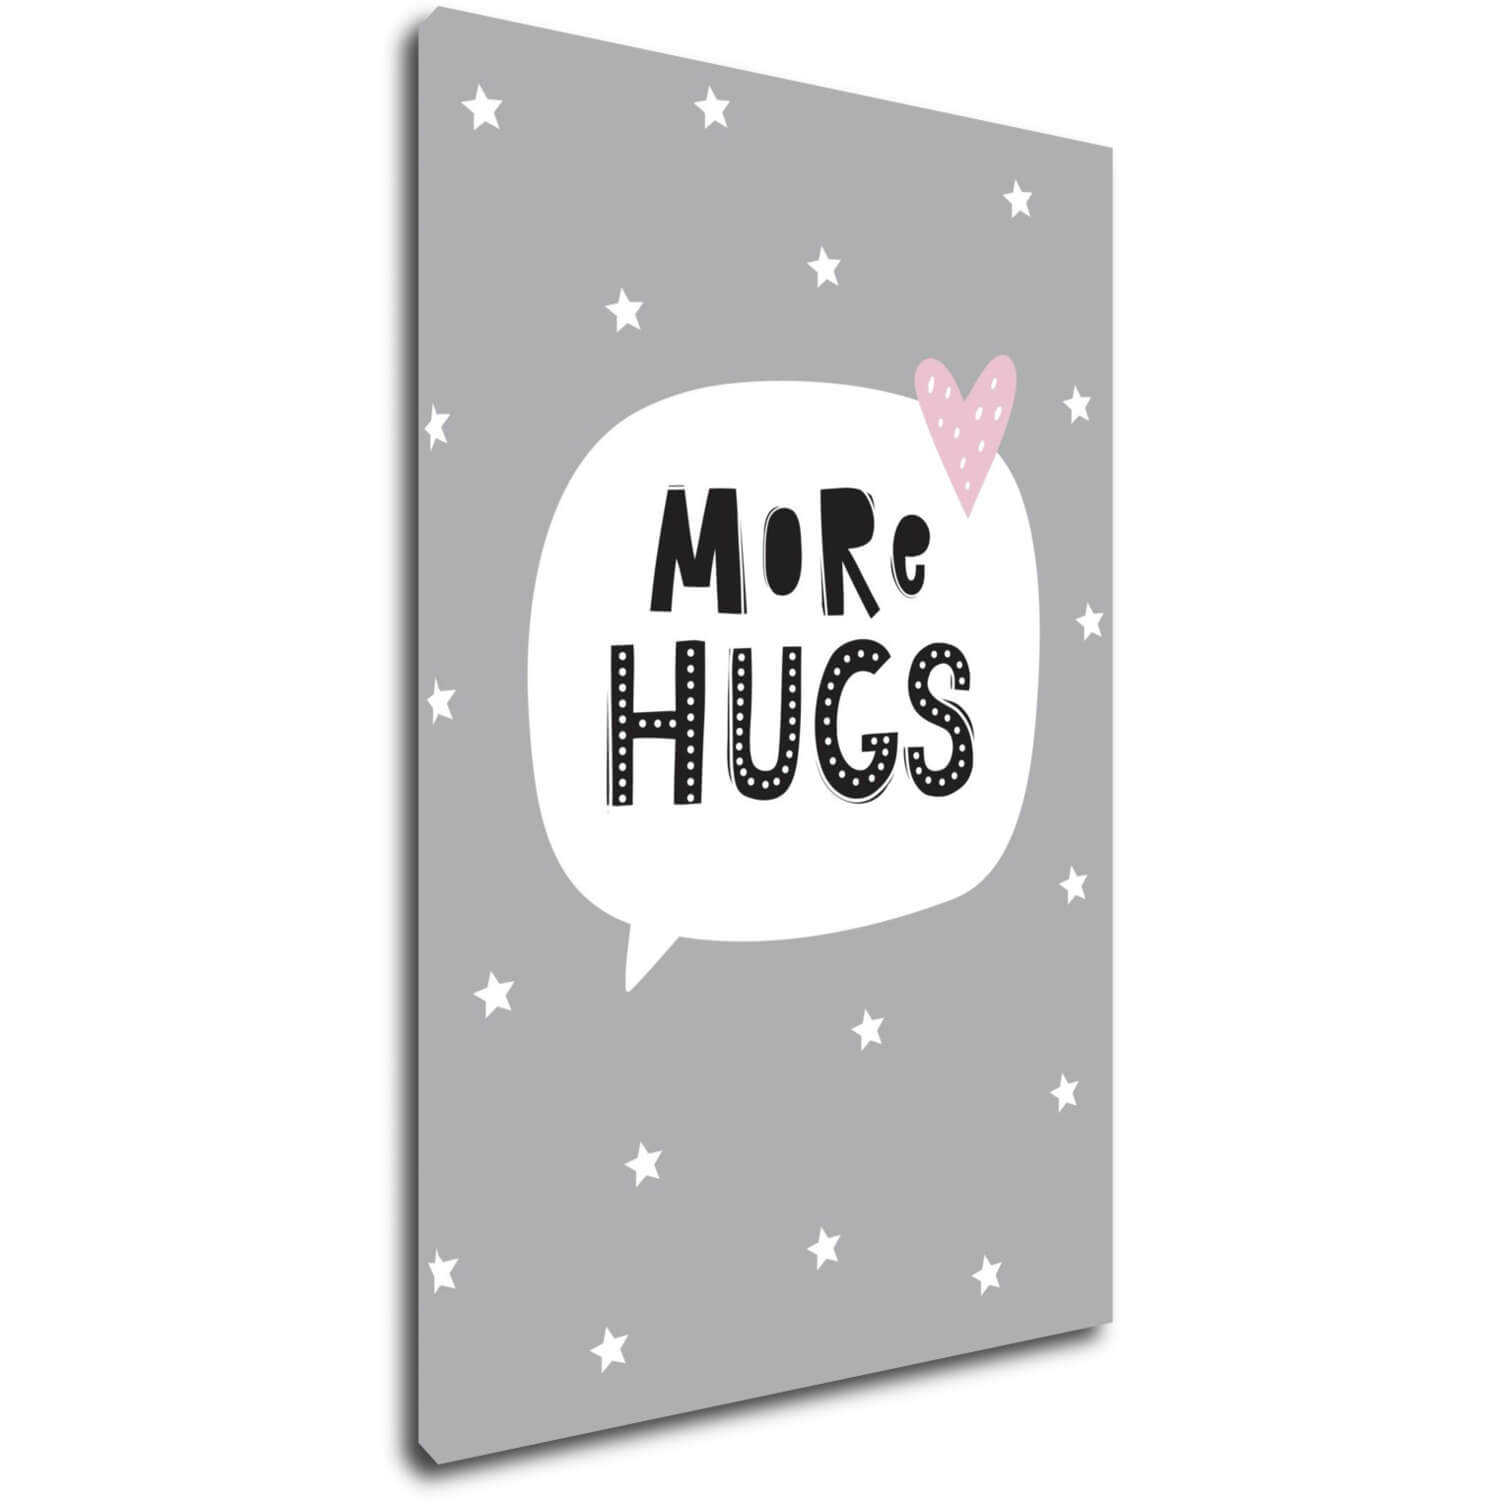 Obraz More hugs šedý - 20 x 30 cm